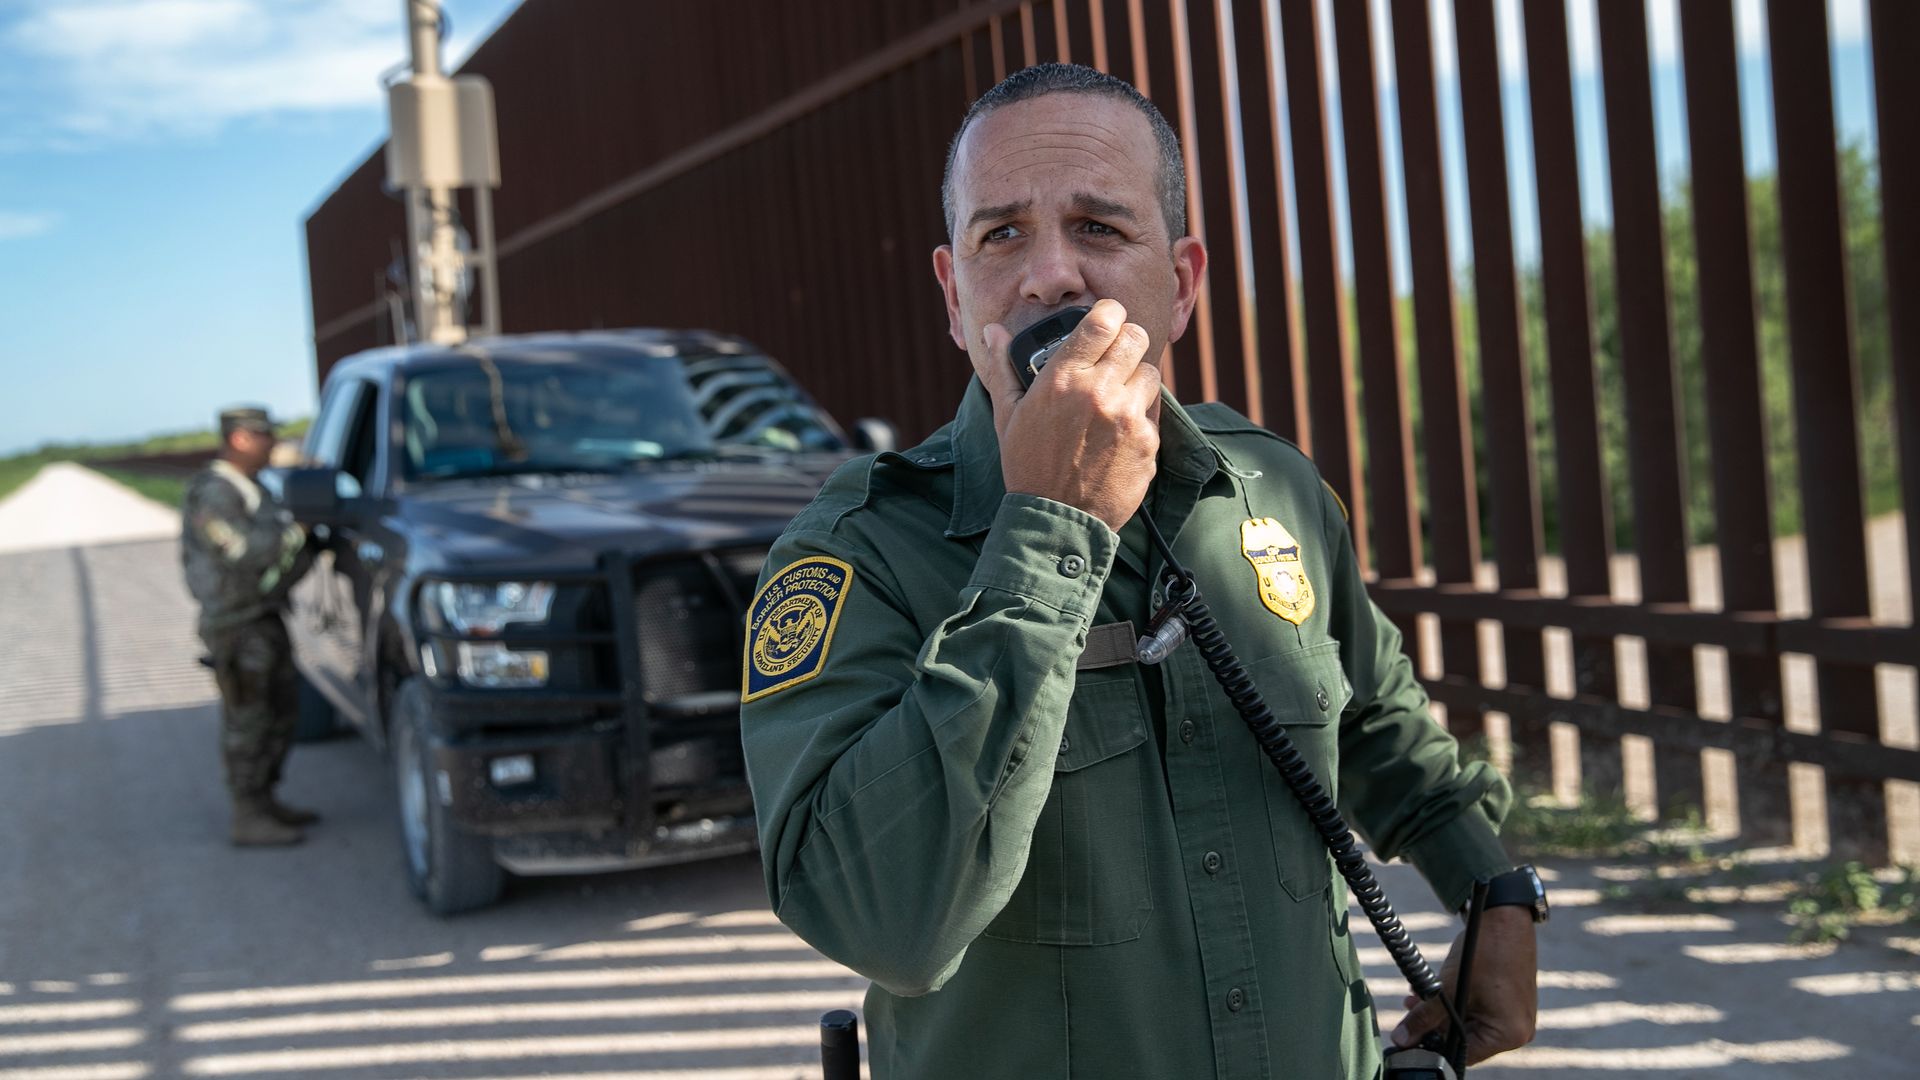  Border Patrol agent Carlos Ruiz spots undocumented immigrants.